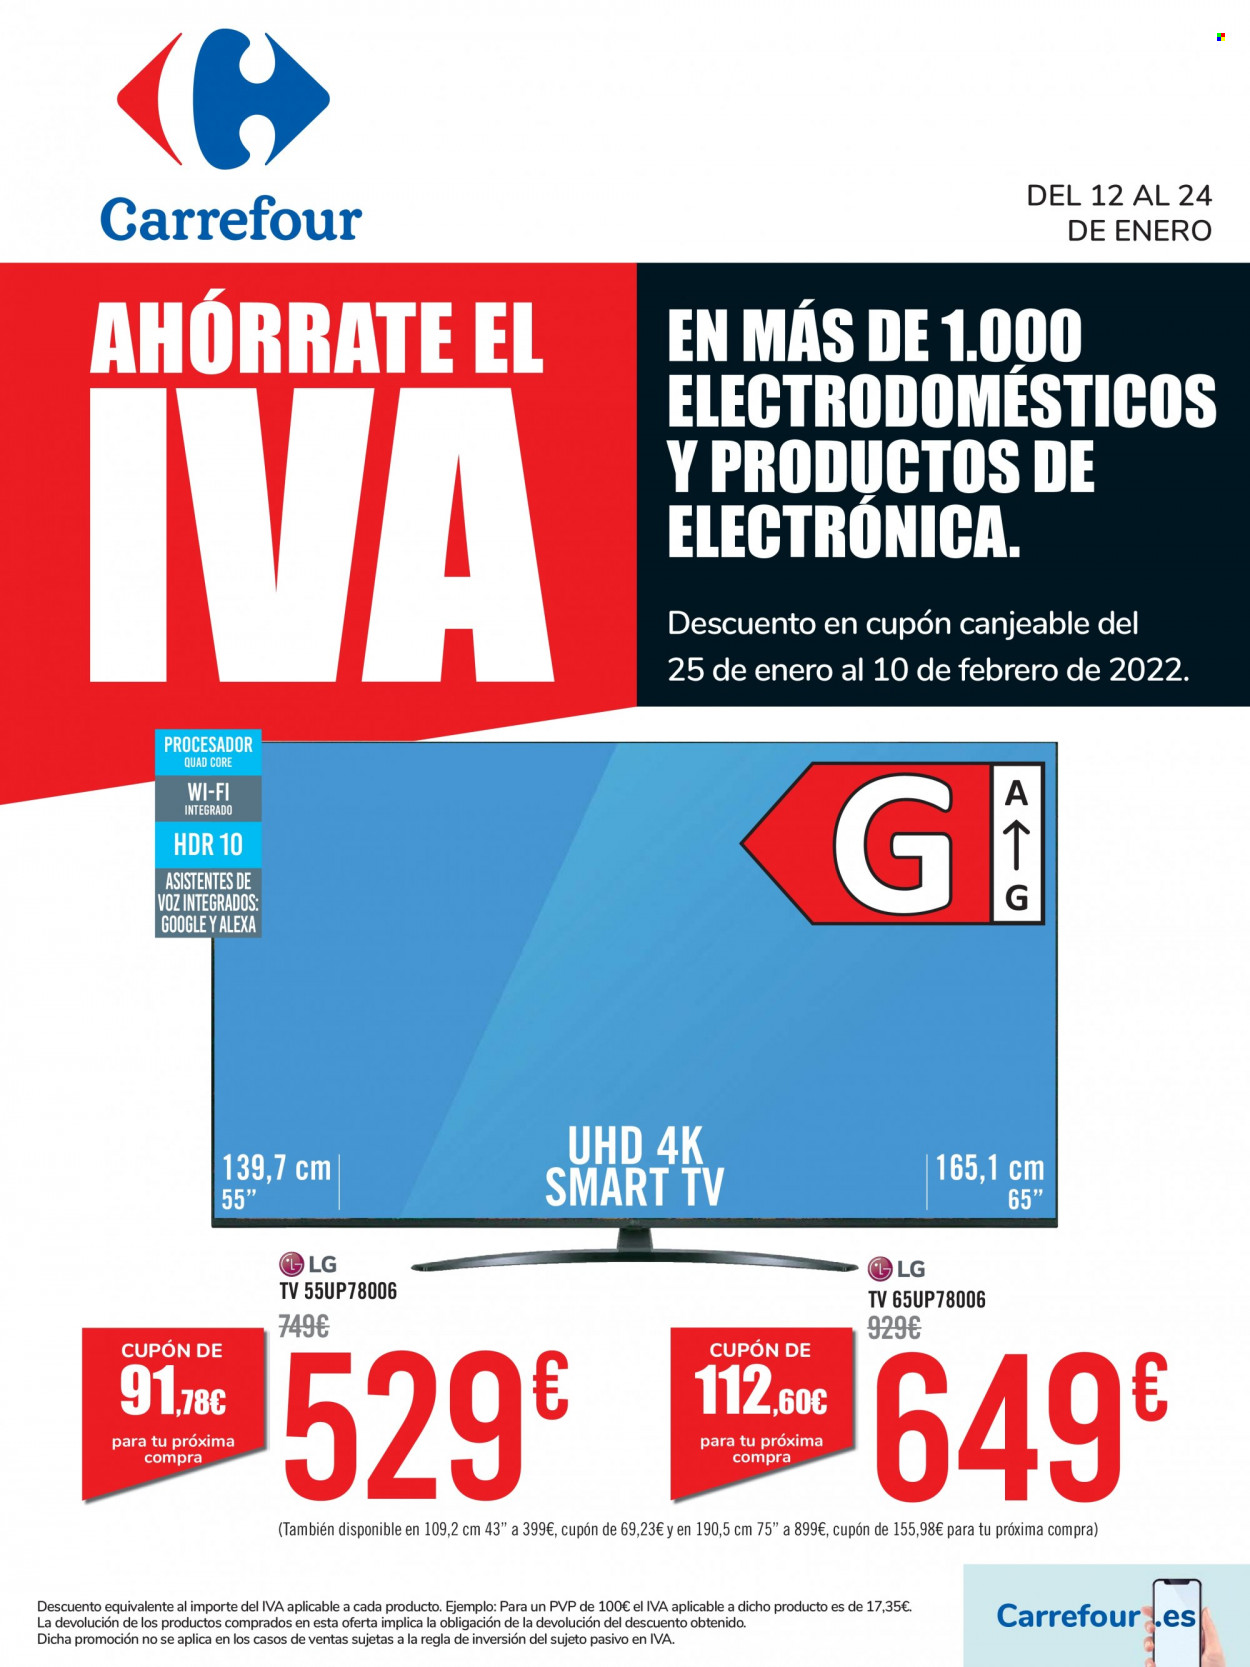 Folleto actual Carrefour - 12/01/22 - 24/01/22 - Ventas - LG, regla, Smart TV, televisor. Página 1.